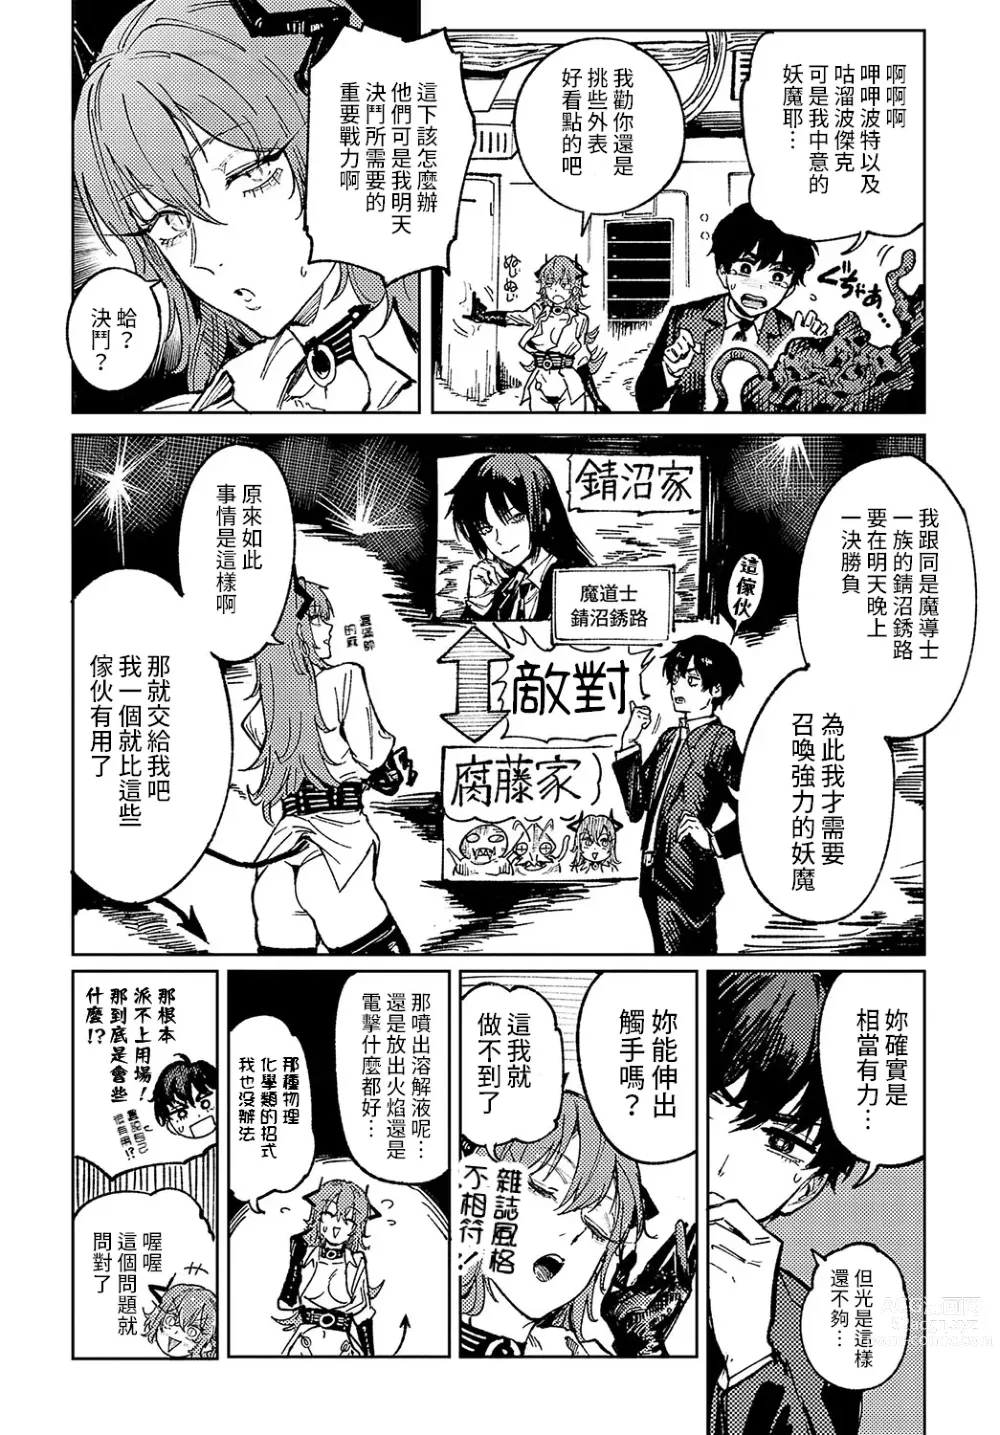 Page 4 of manga Youran Makou